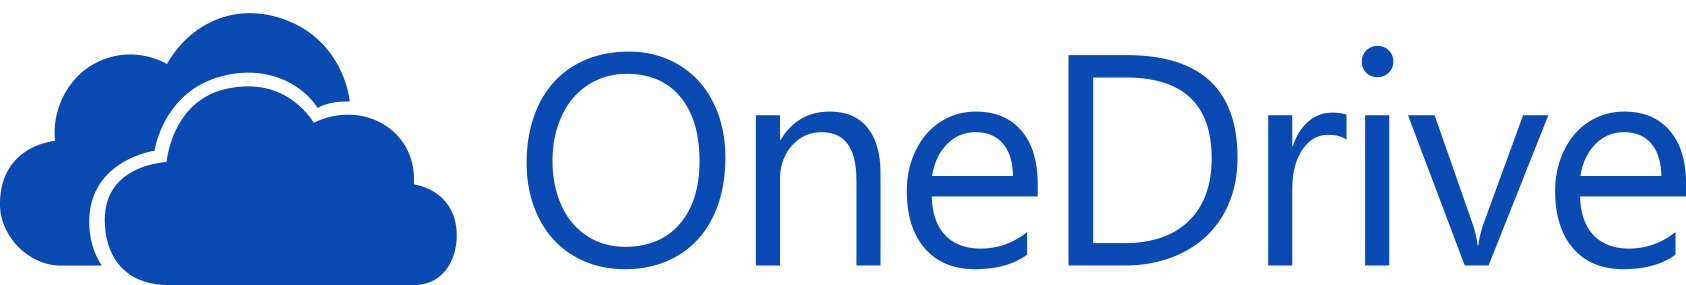 Microsoft onedrive logo transparent - getafad